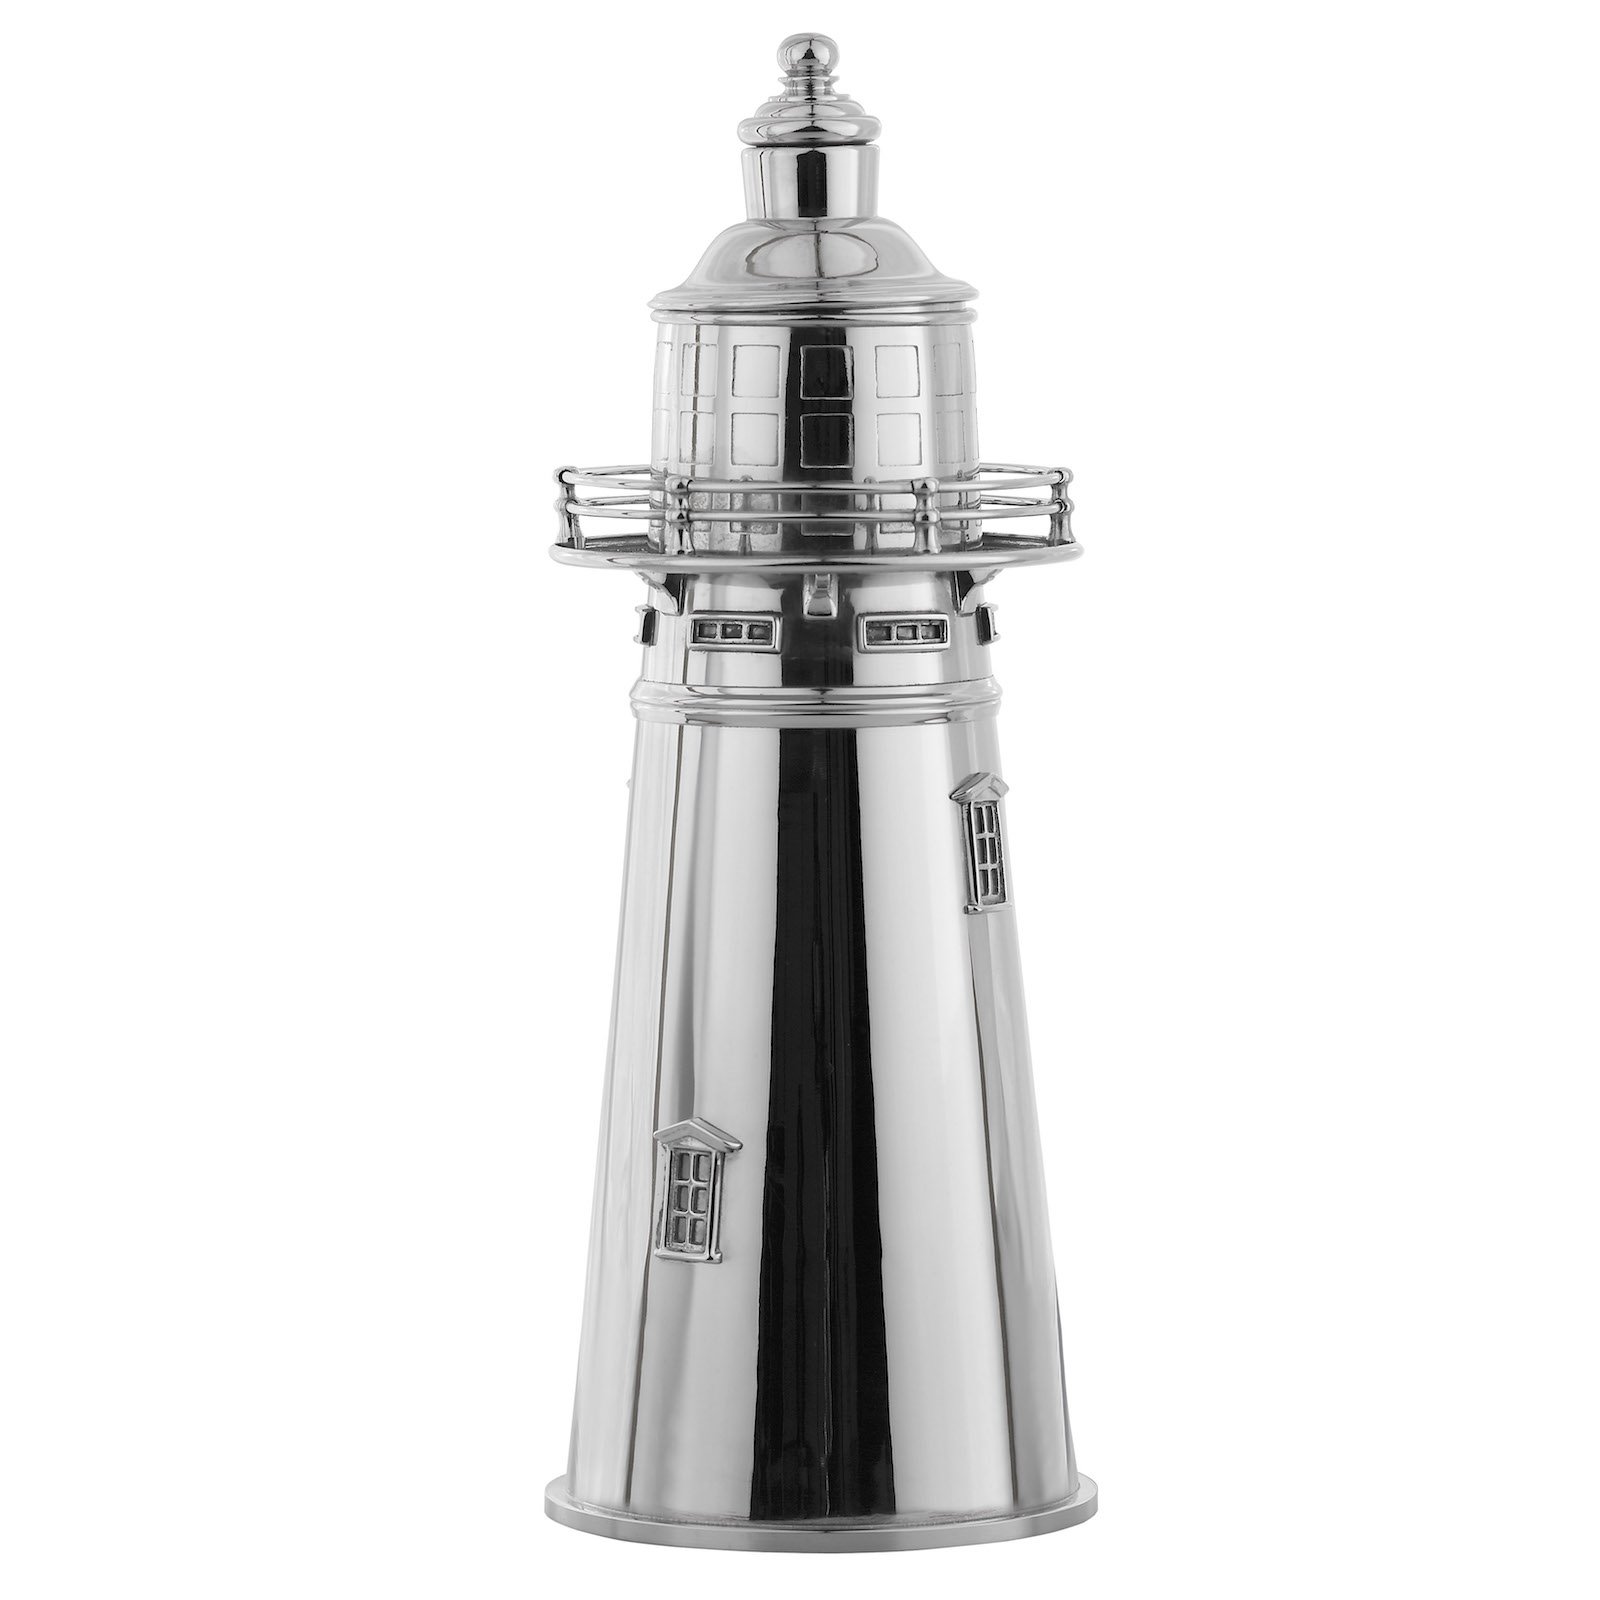 Lighthouse Cocktail Shaker Image